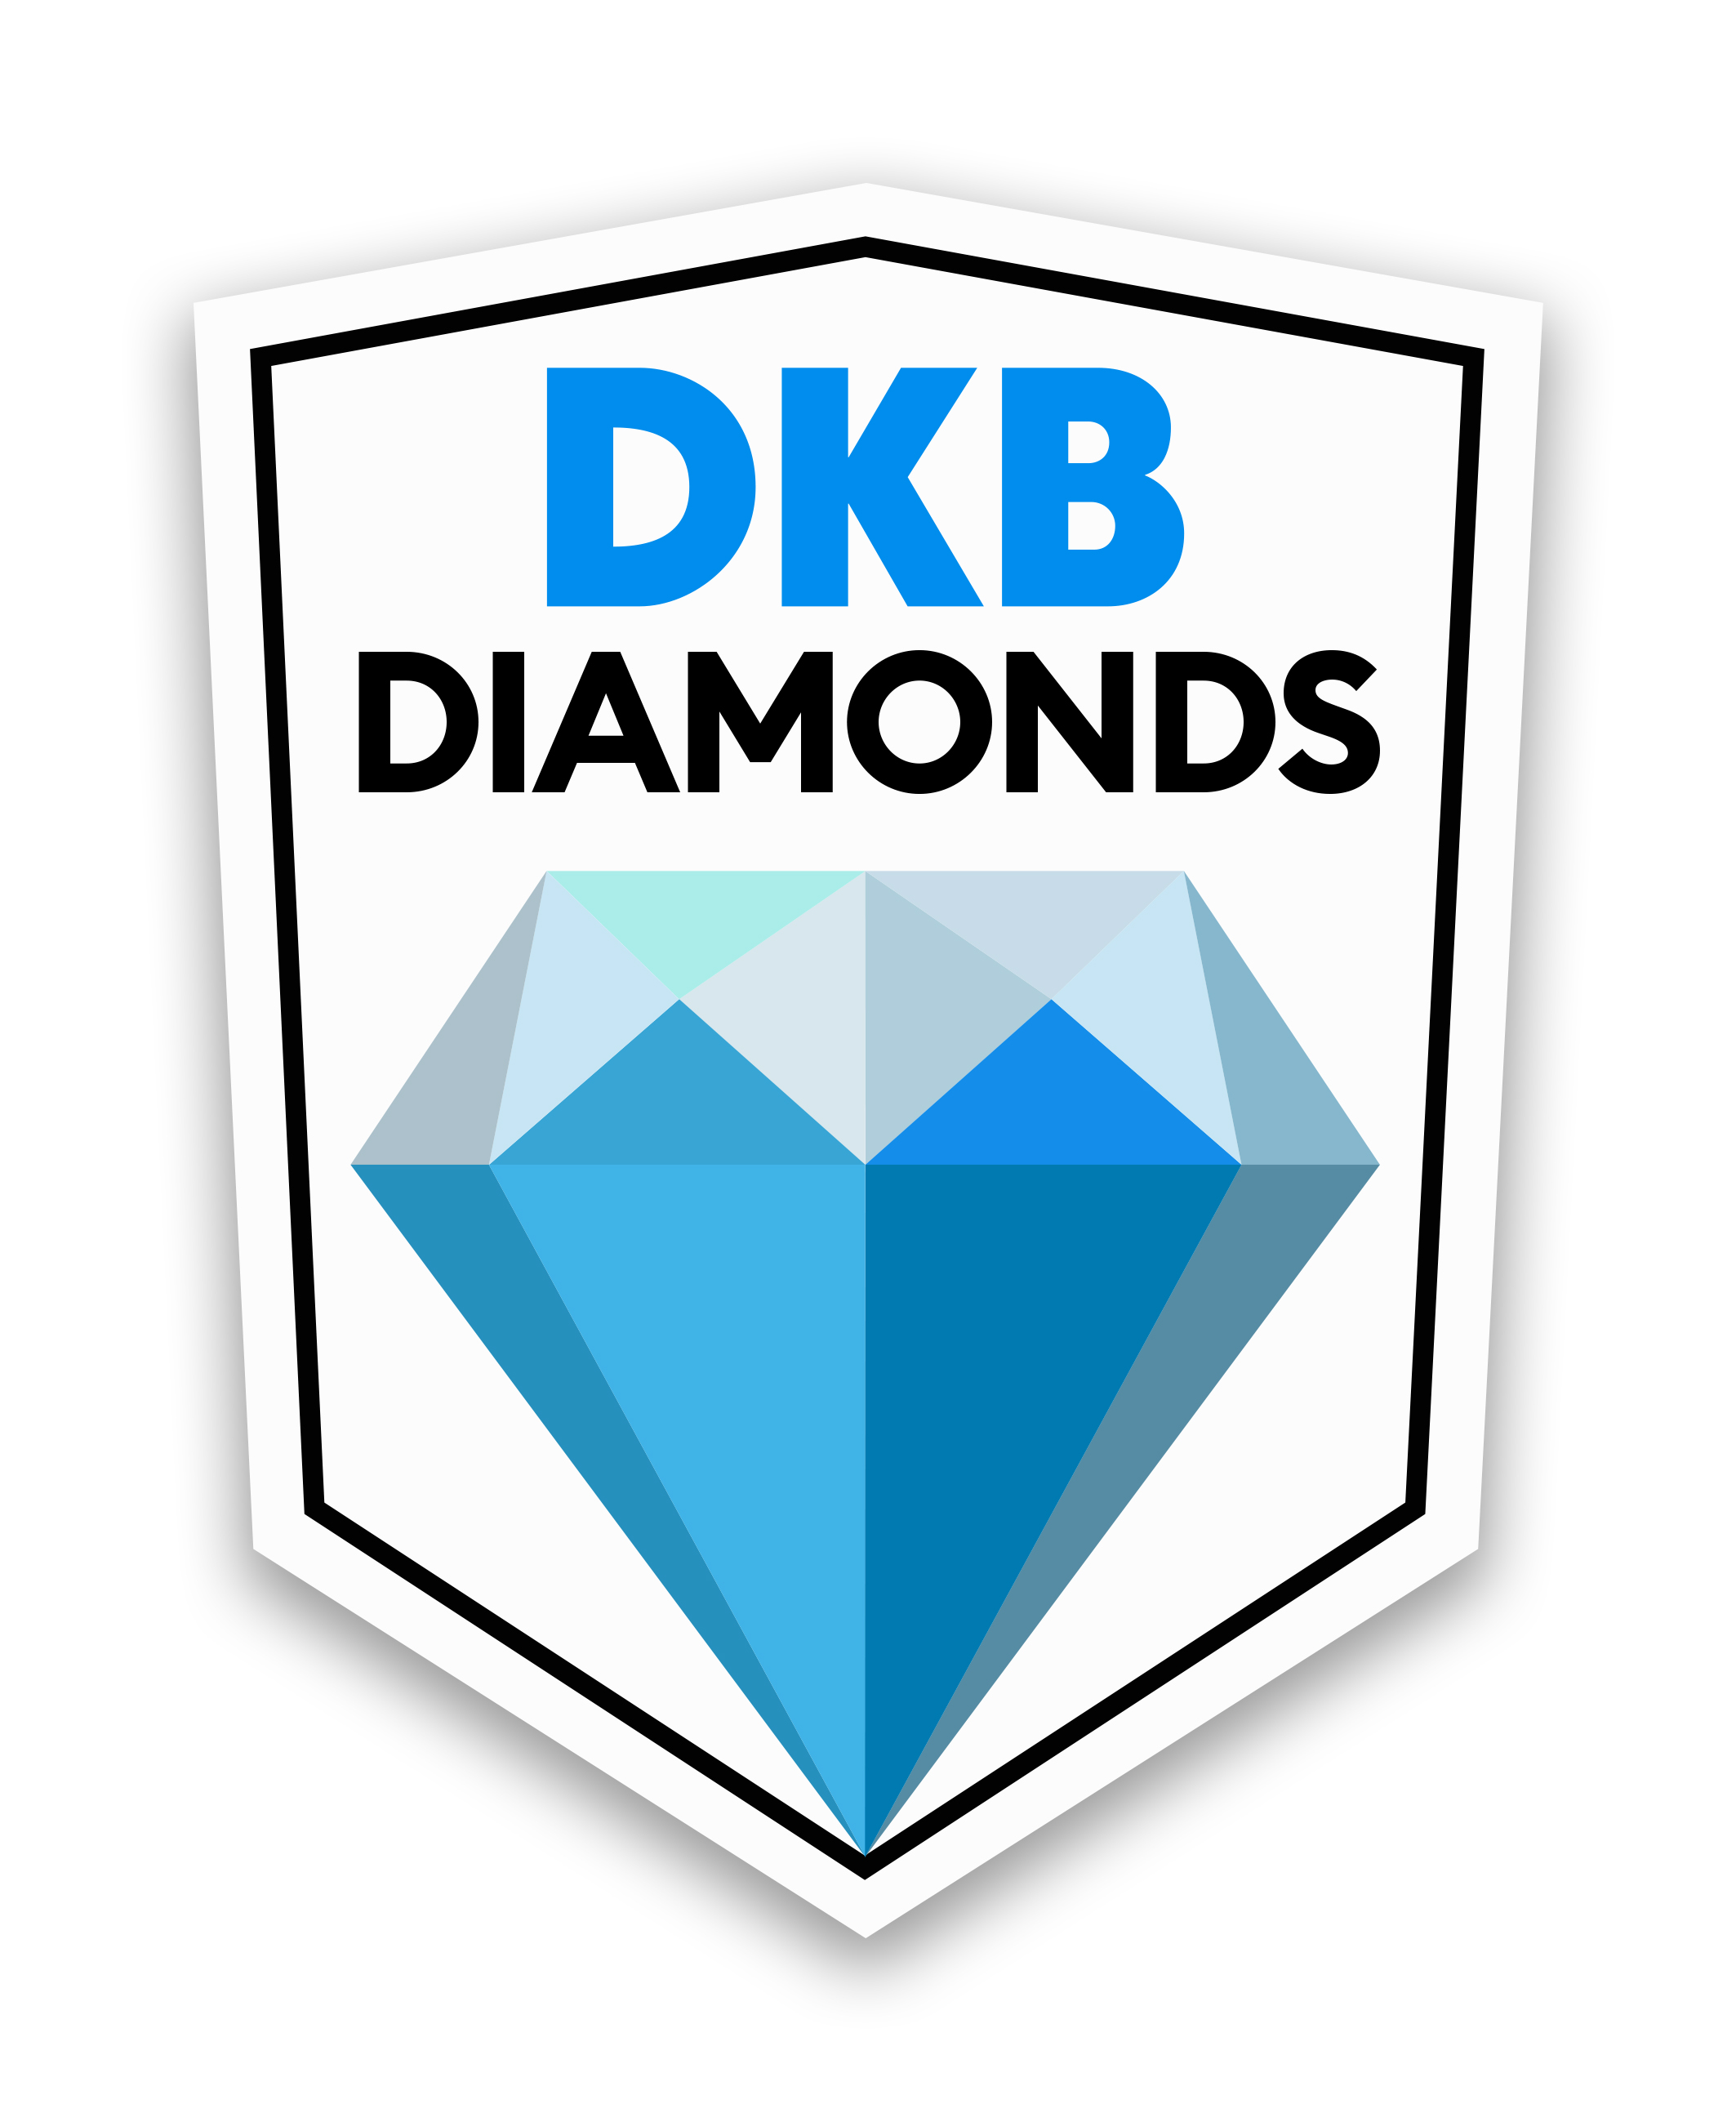 DKB Diamonds